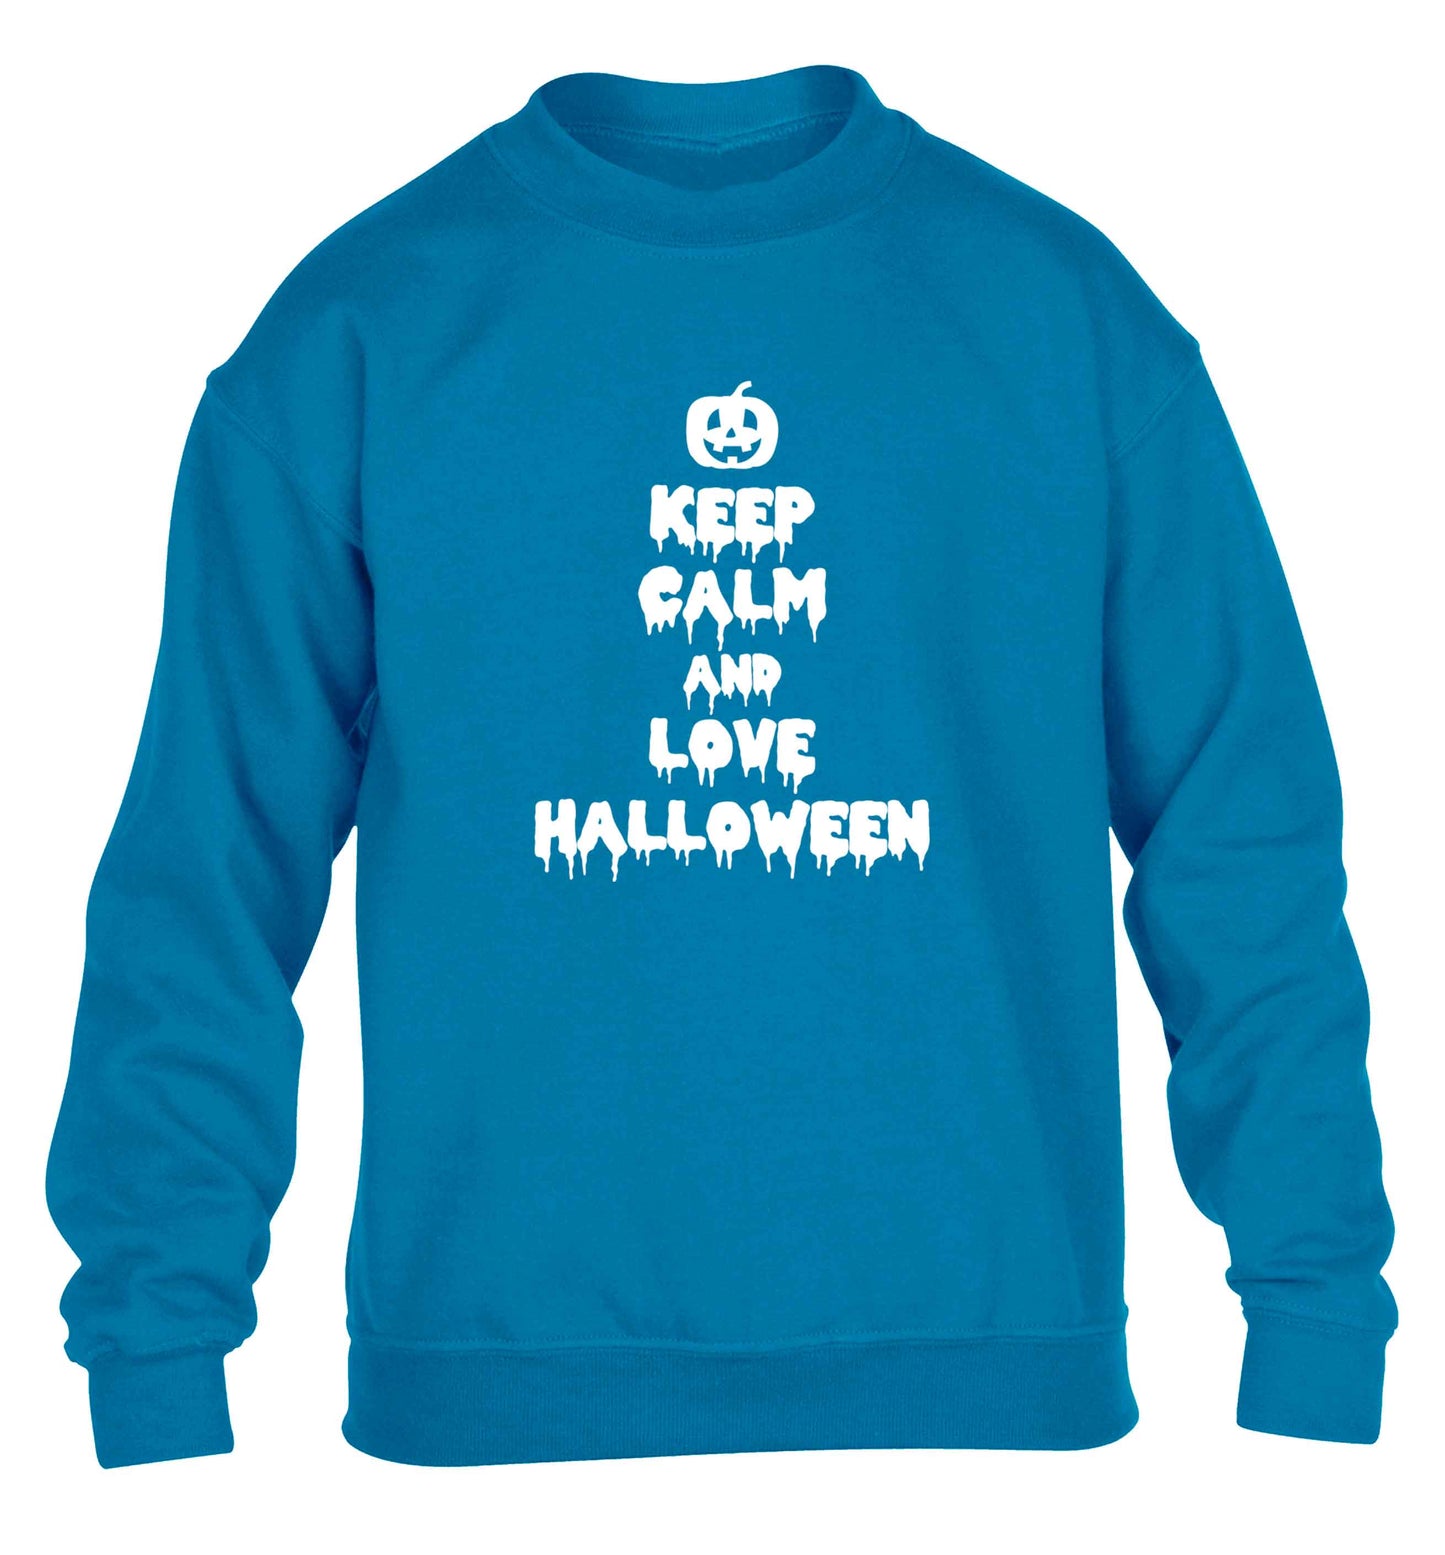 Keep calm and love halloween children's blue sweater 12-13 Years